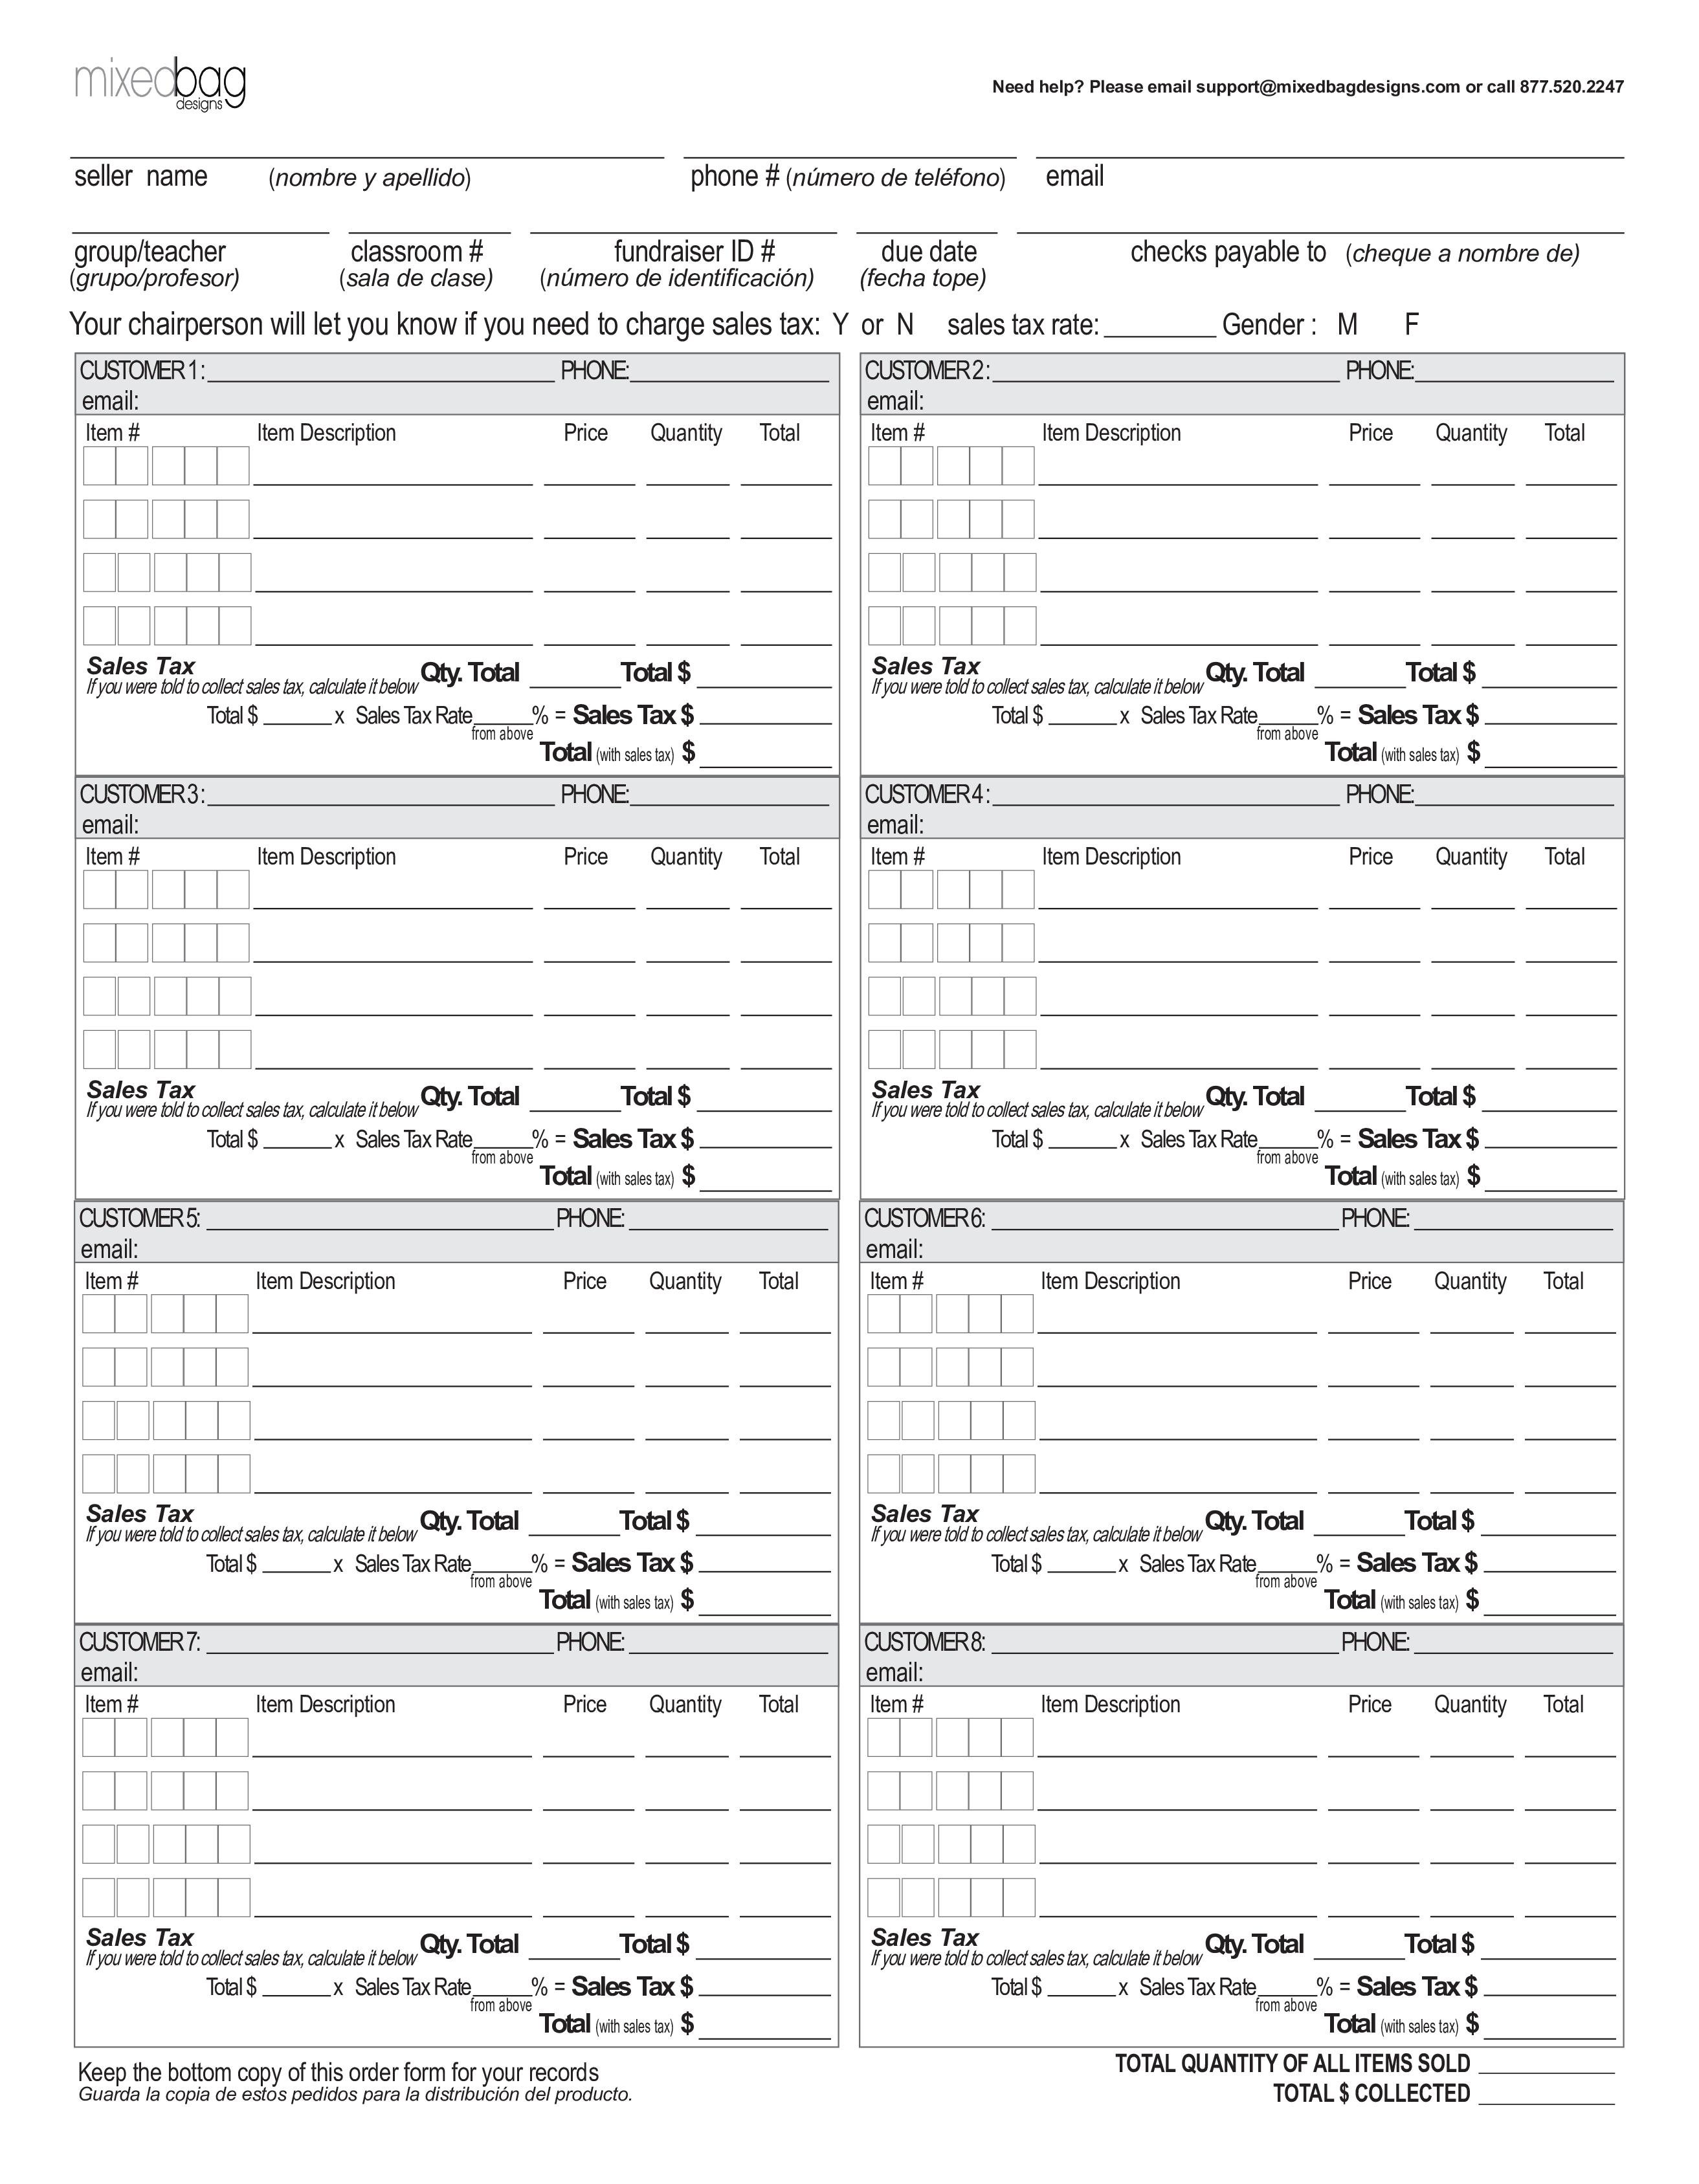 Student Order Form sheet main image